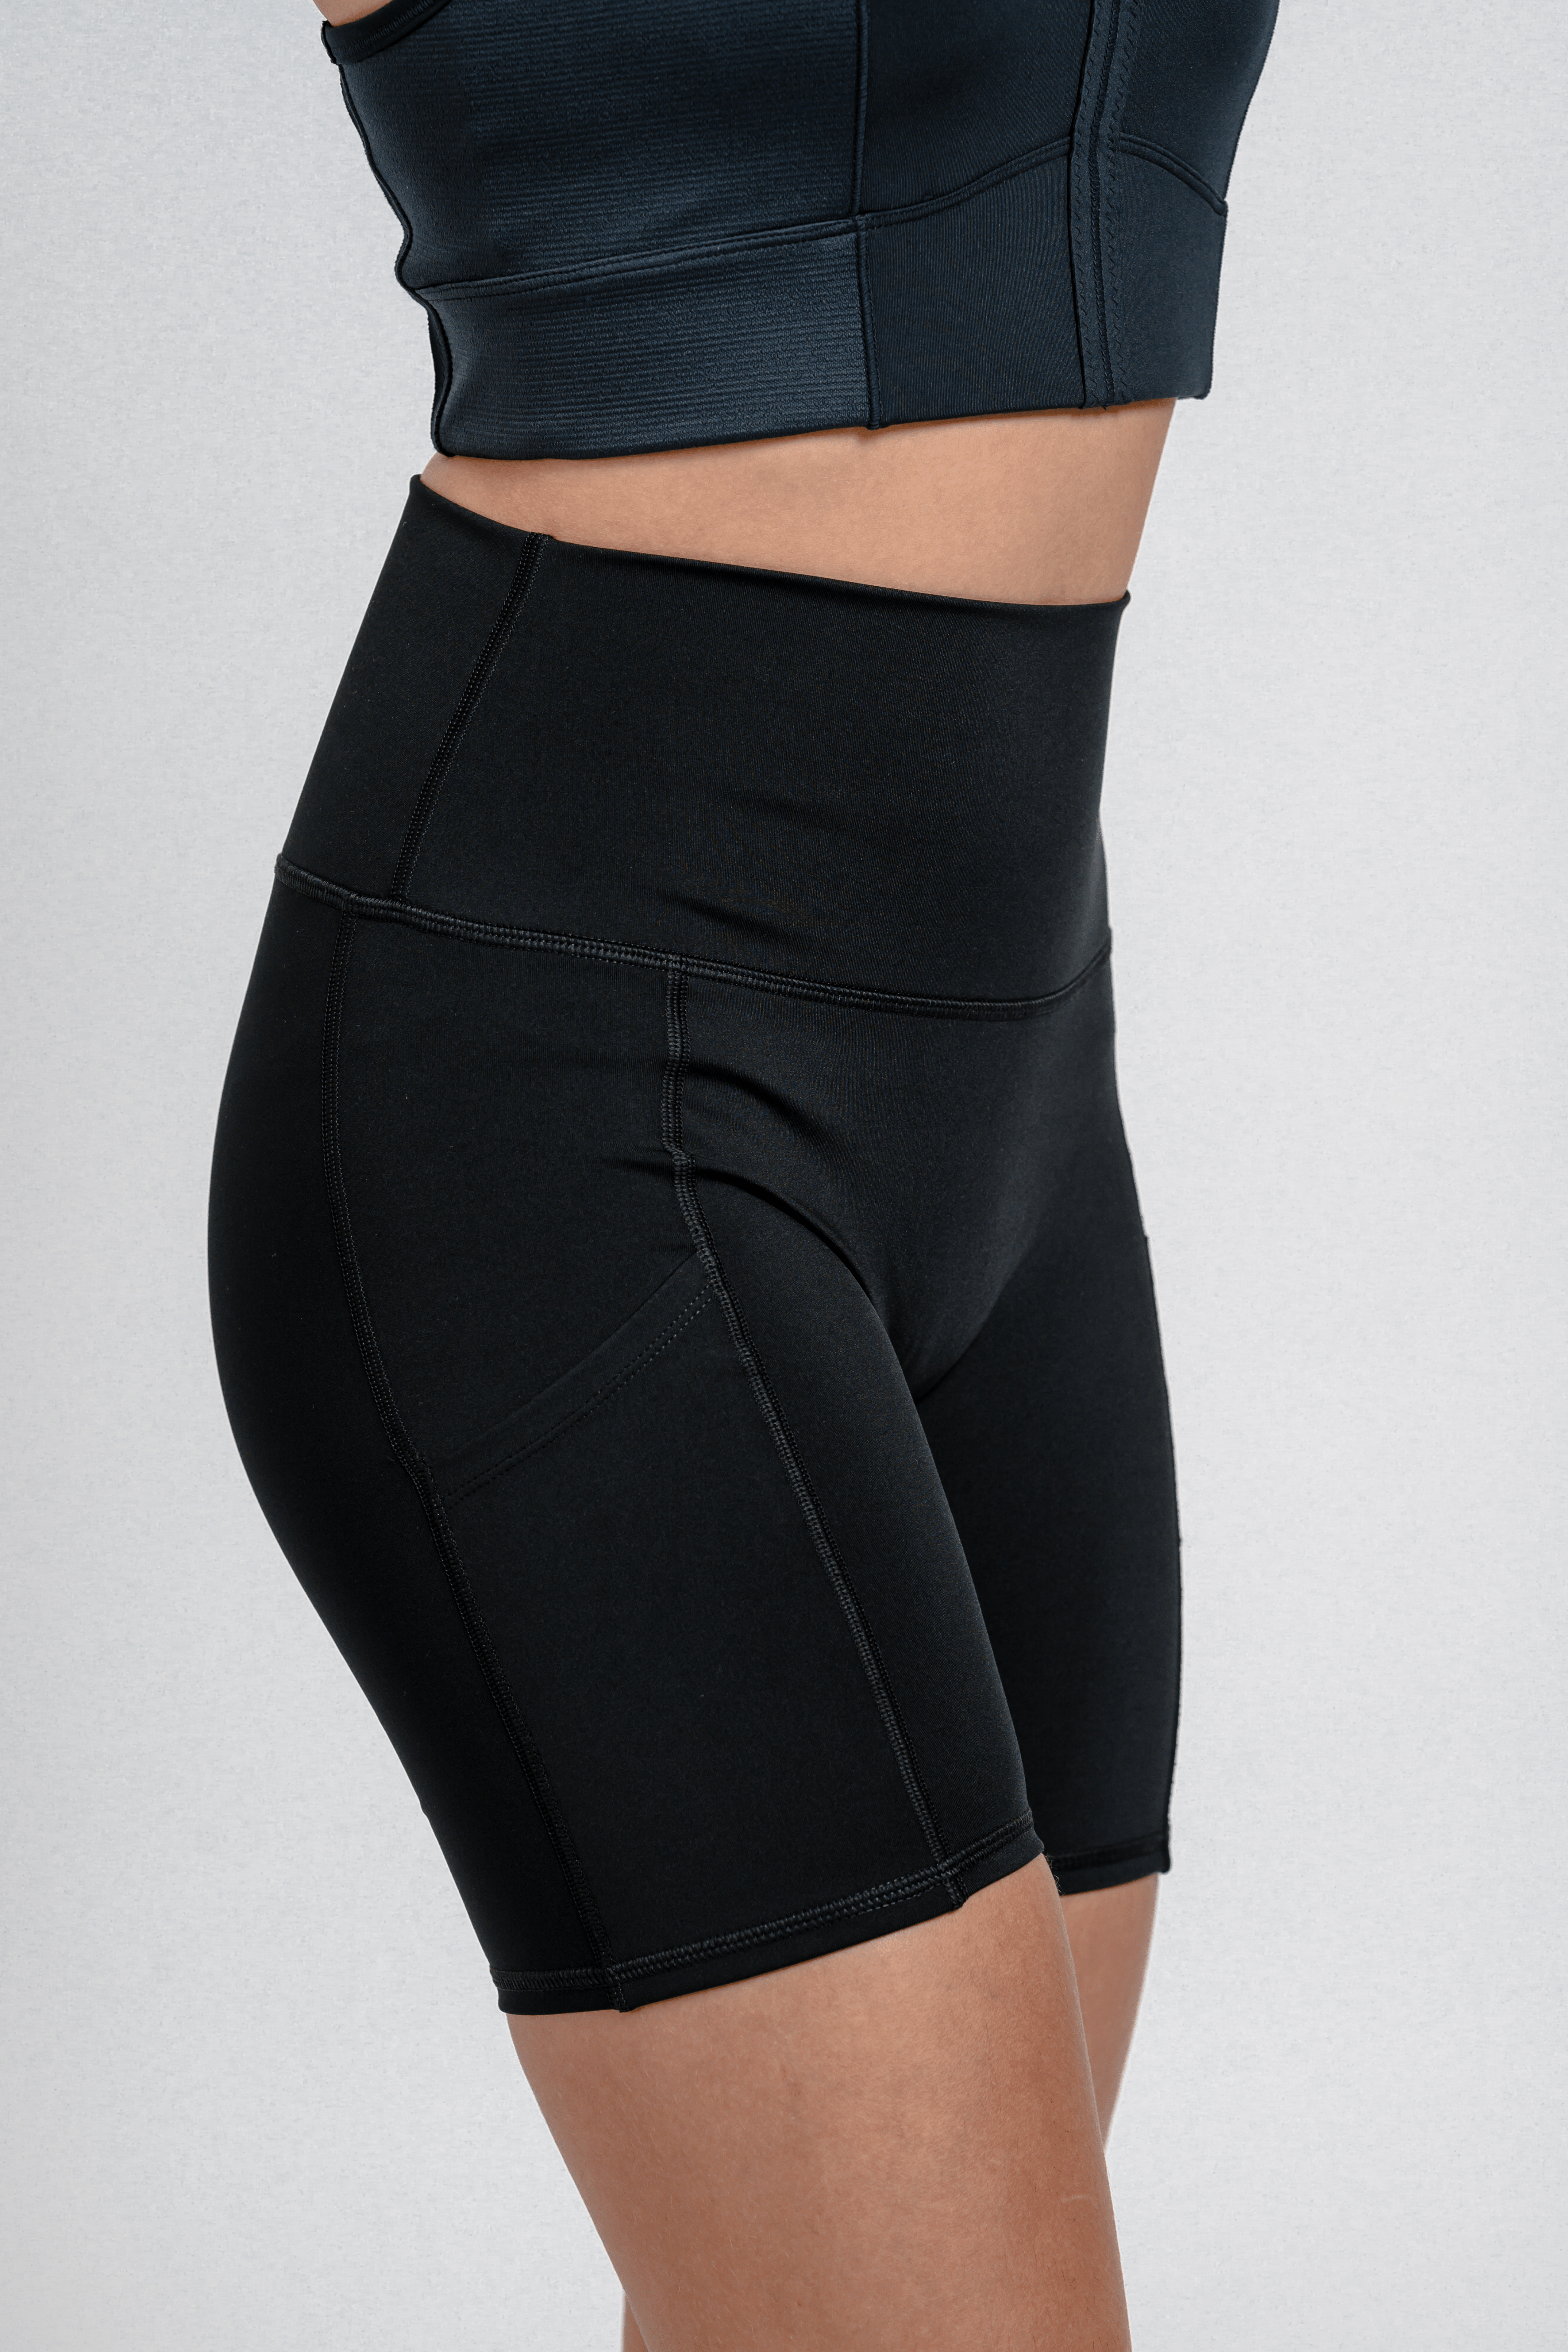 LAICA Pocket Biker Shorts - Onyx